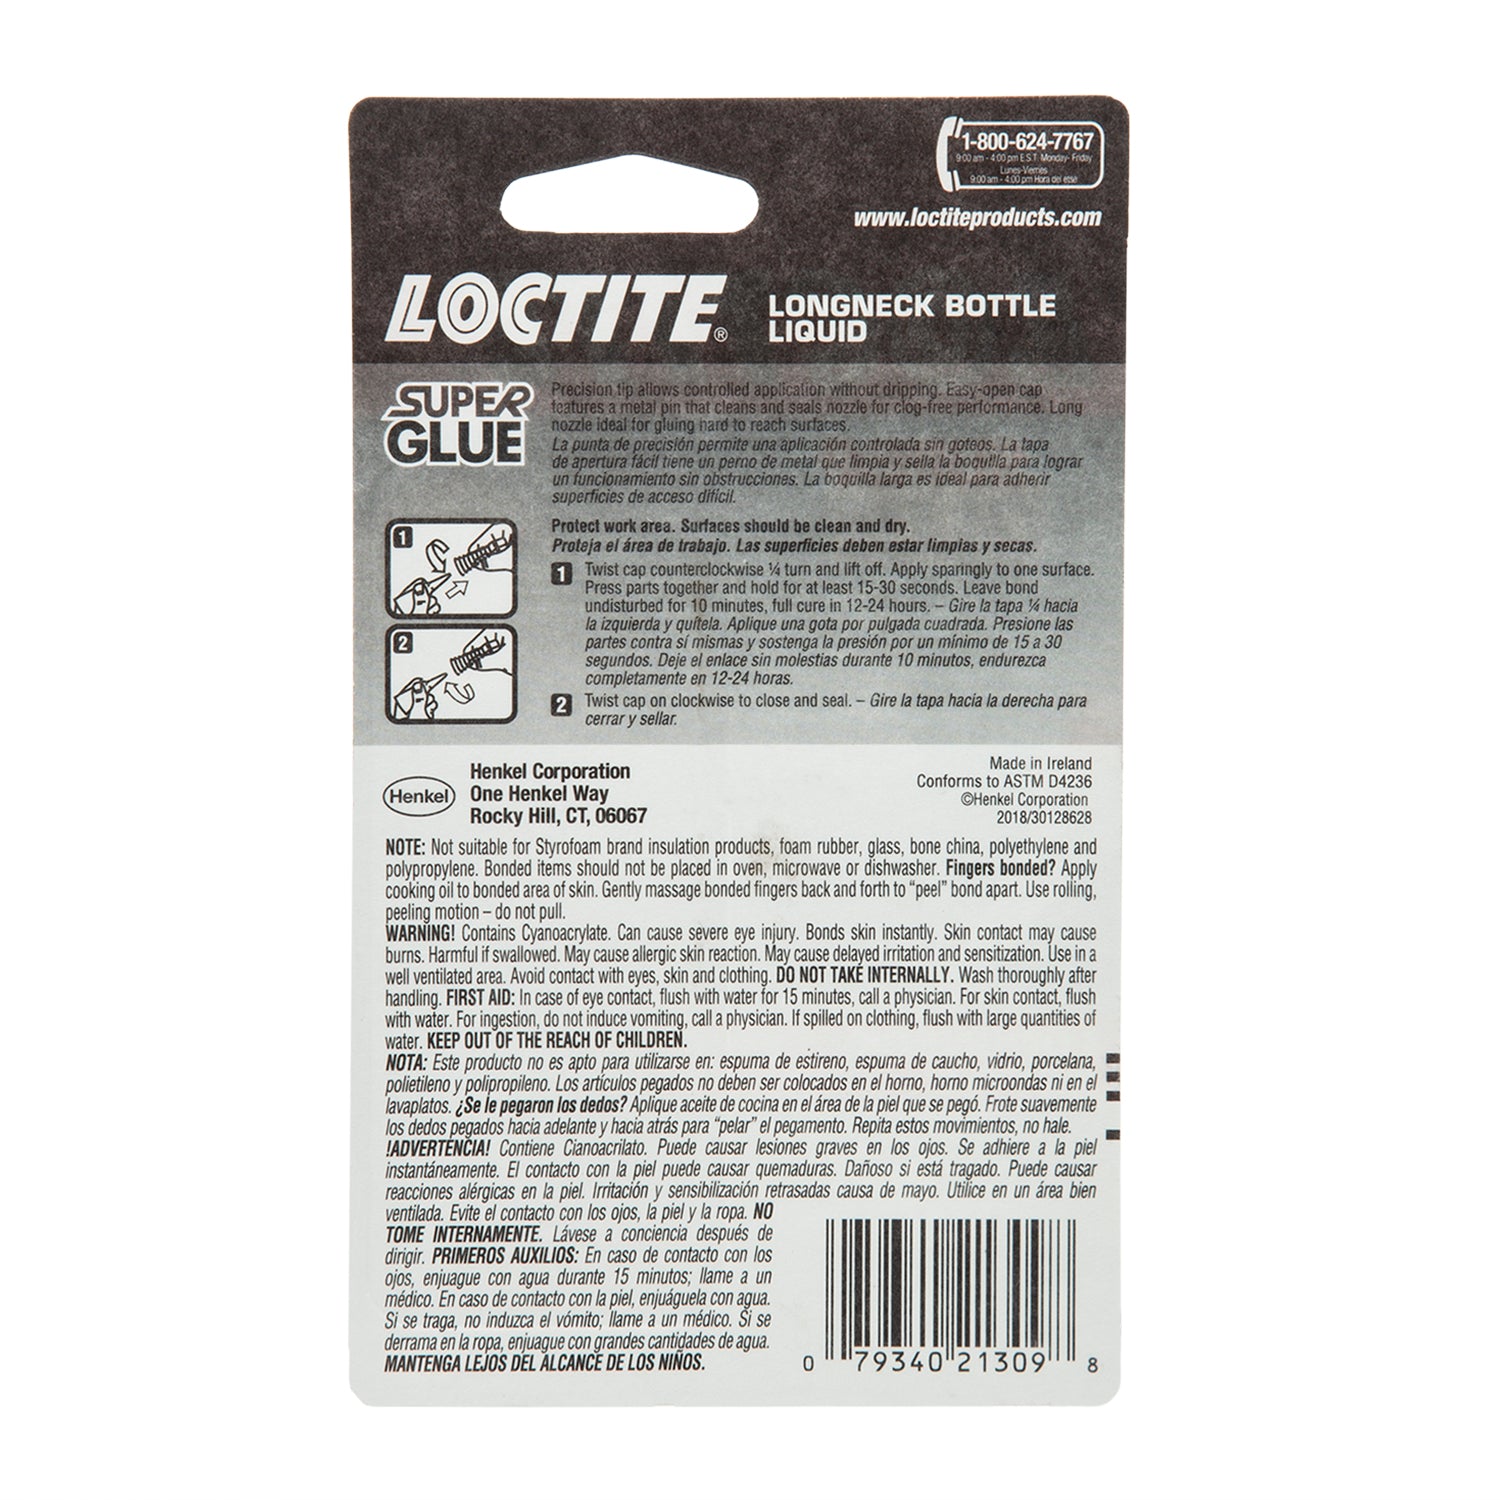 Loctite Super Glue Liquid- Long Neck Bottle - 5gm bottle data-zoom=